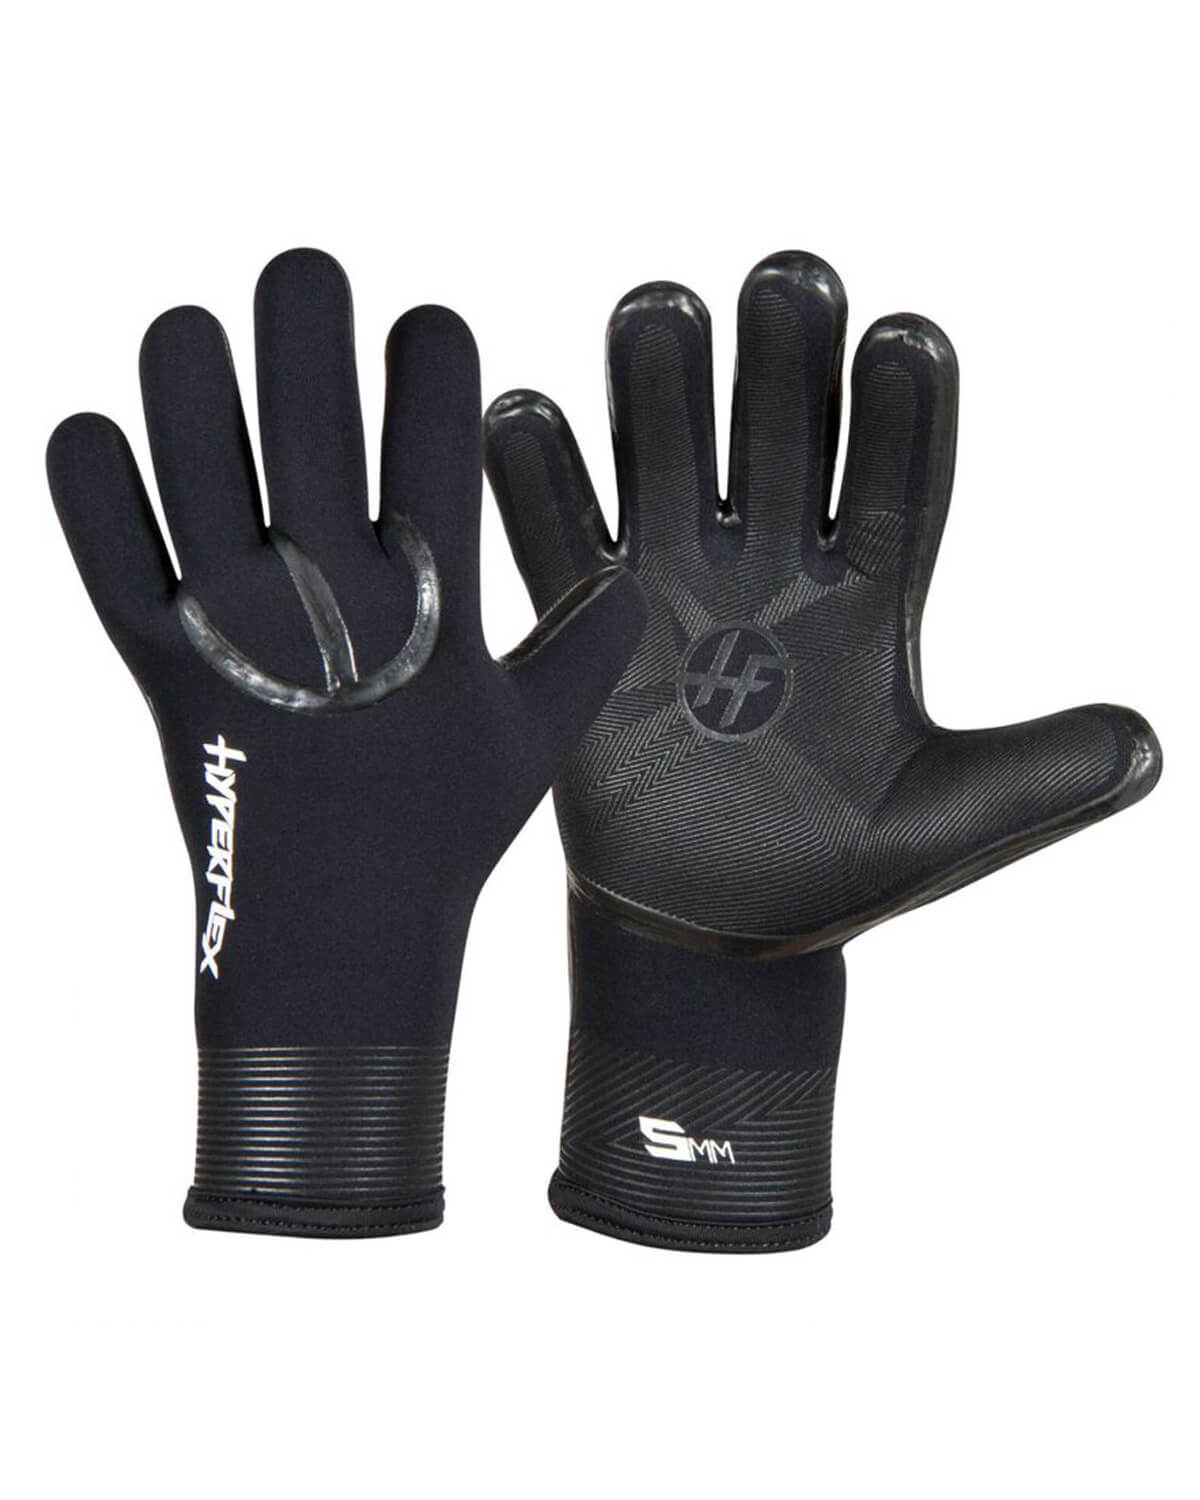 3mm HyperFlex PRO Wetsuit Gloves